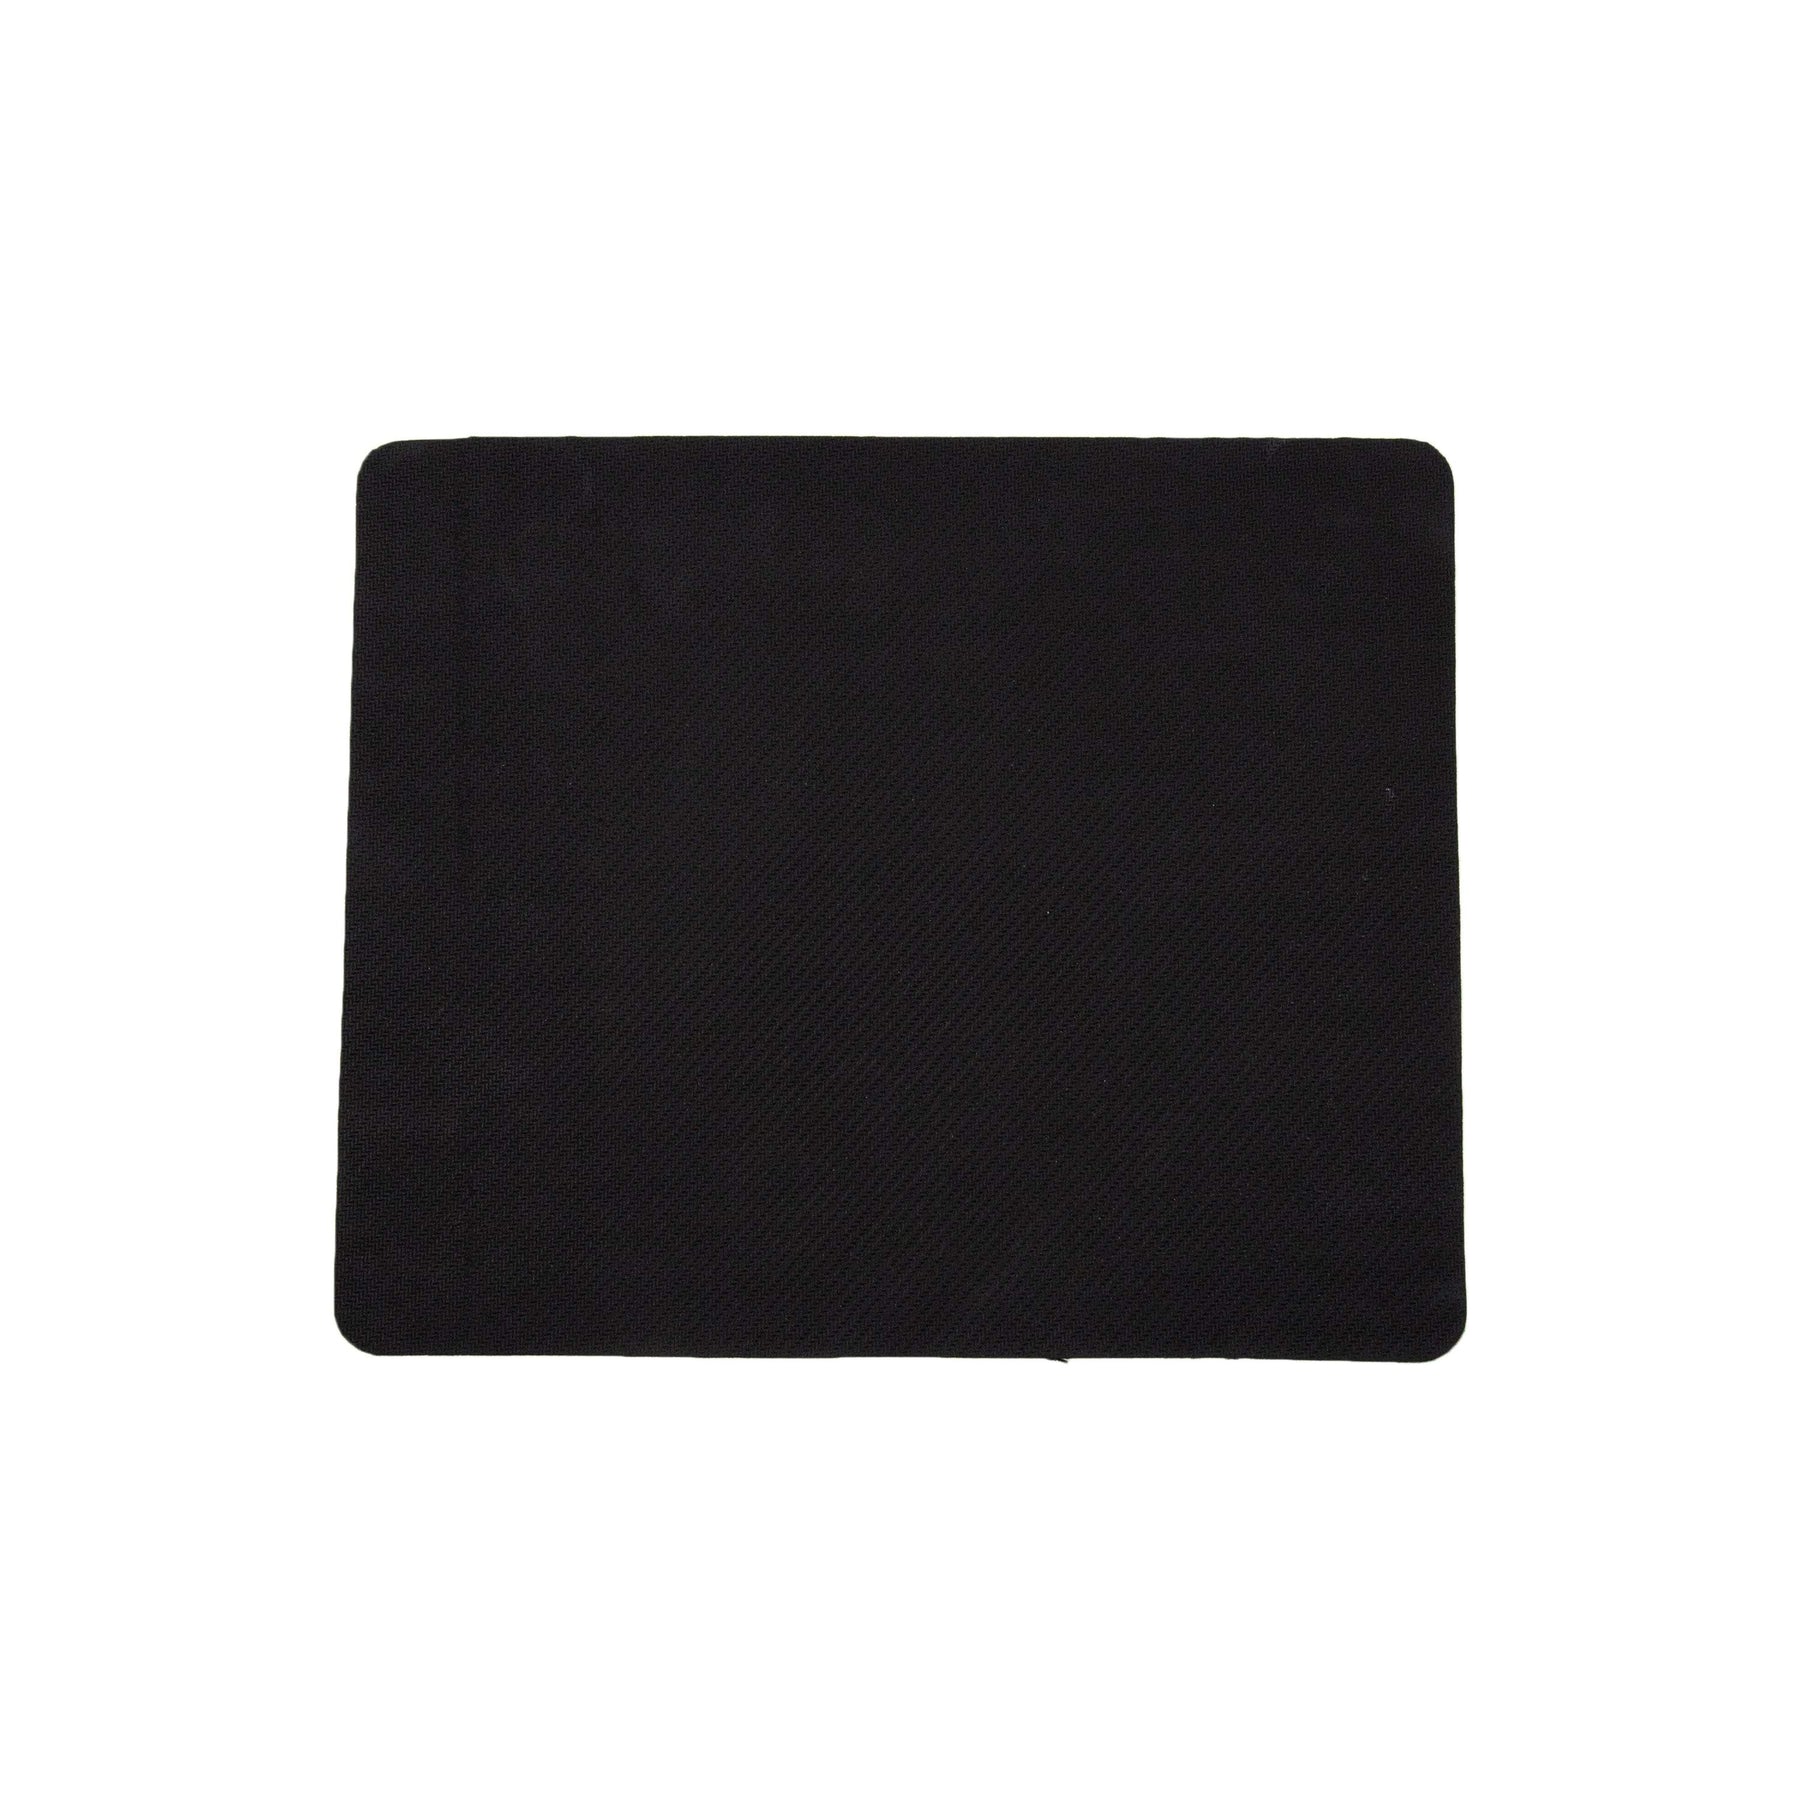 Black Corgi Mouse Pad back of product view